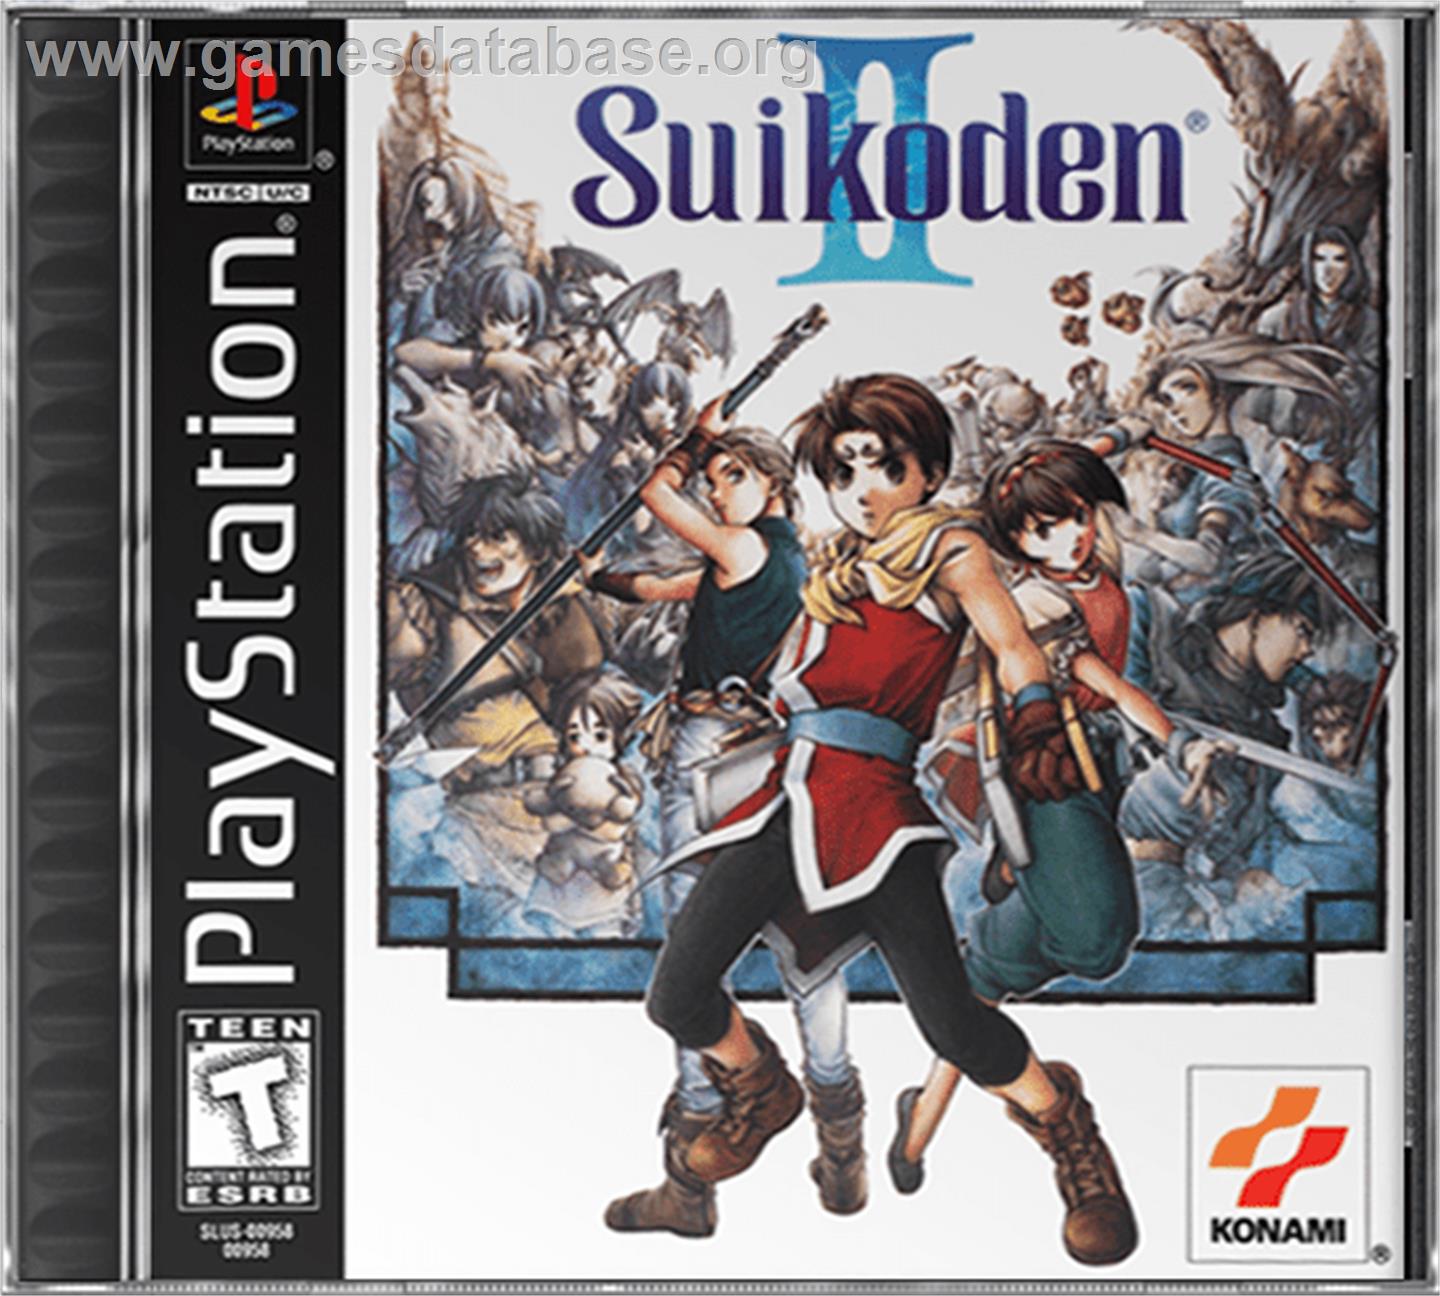 Suikoden II - Sony Playstation - Artwork - Box